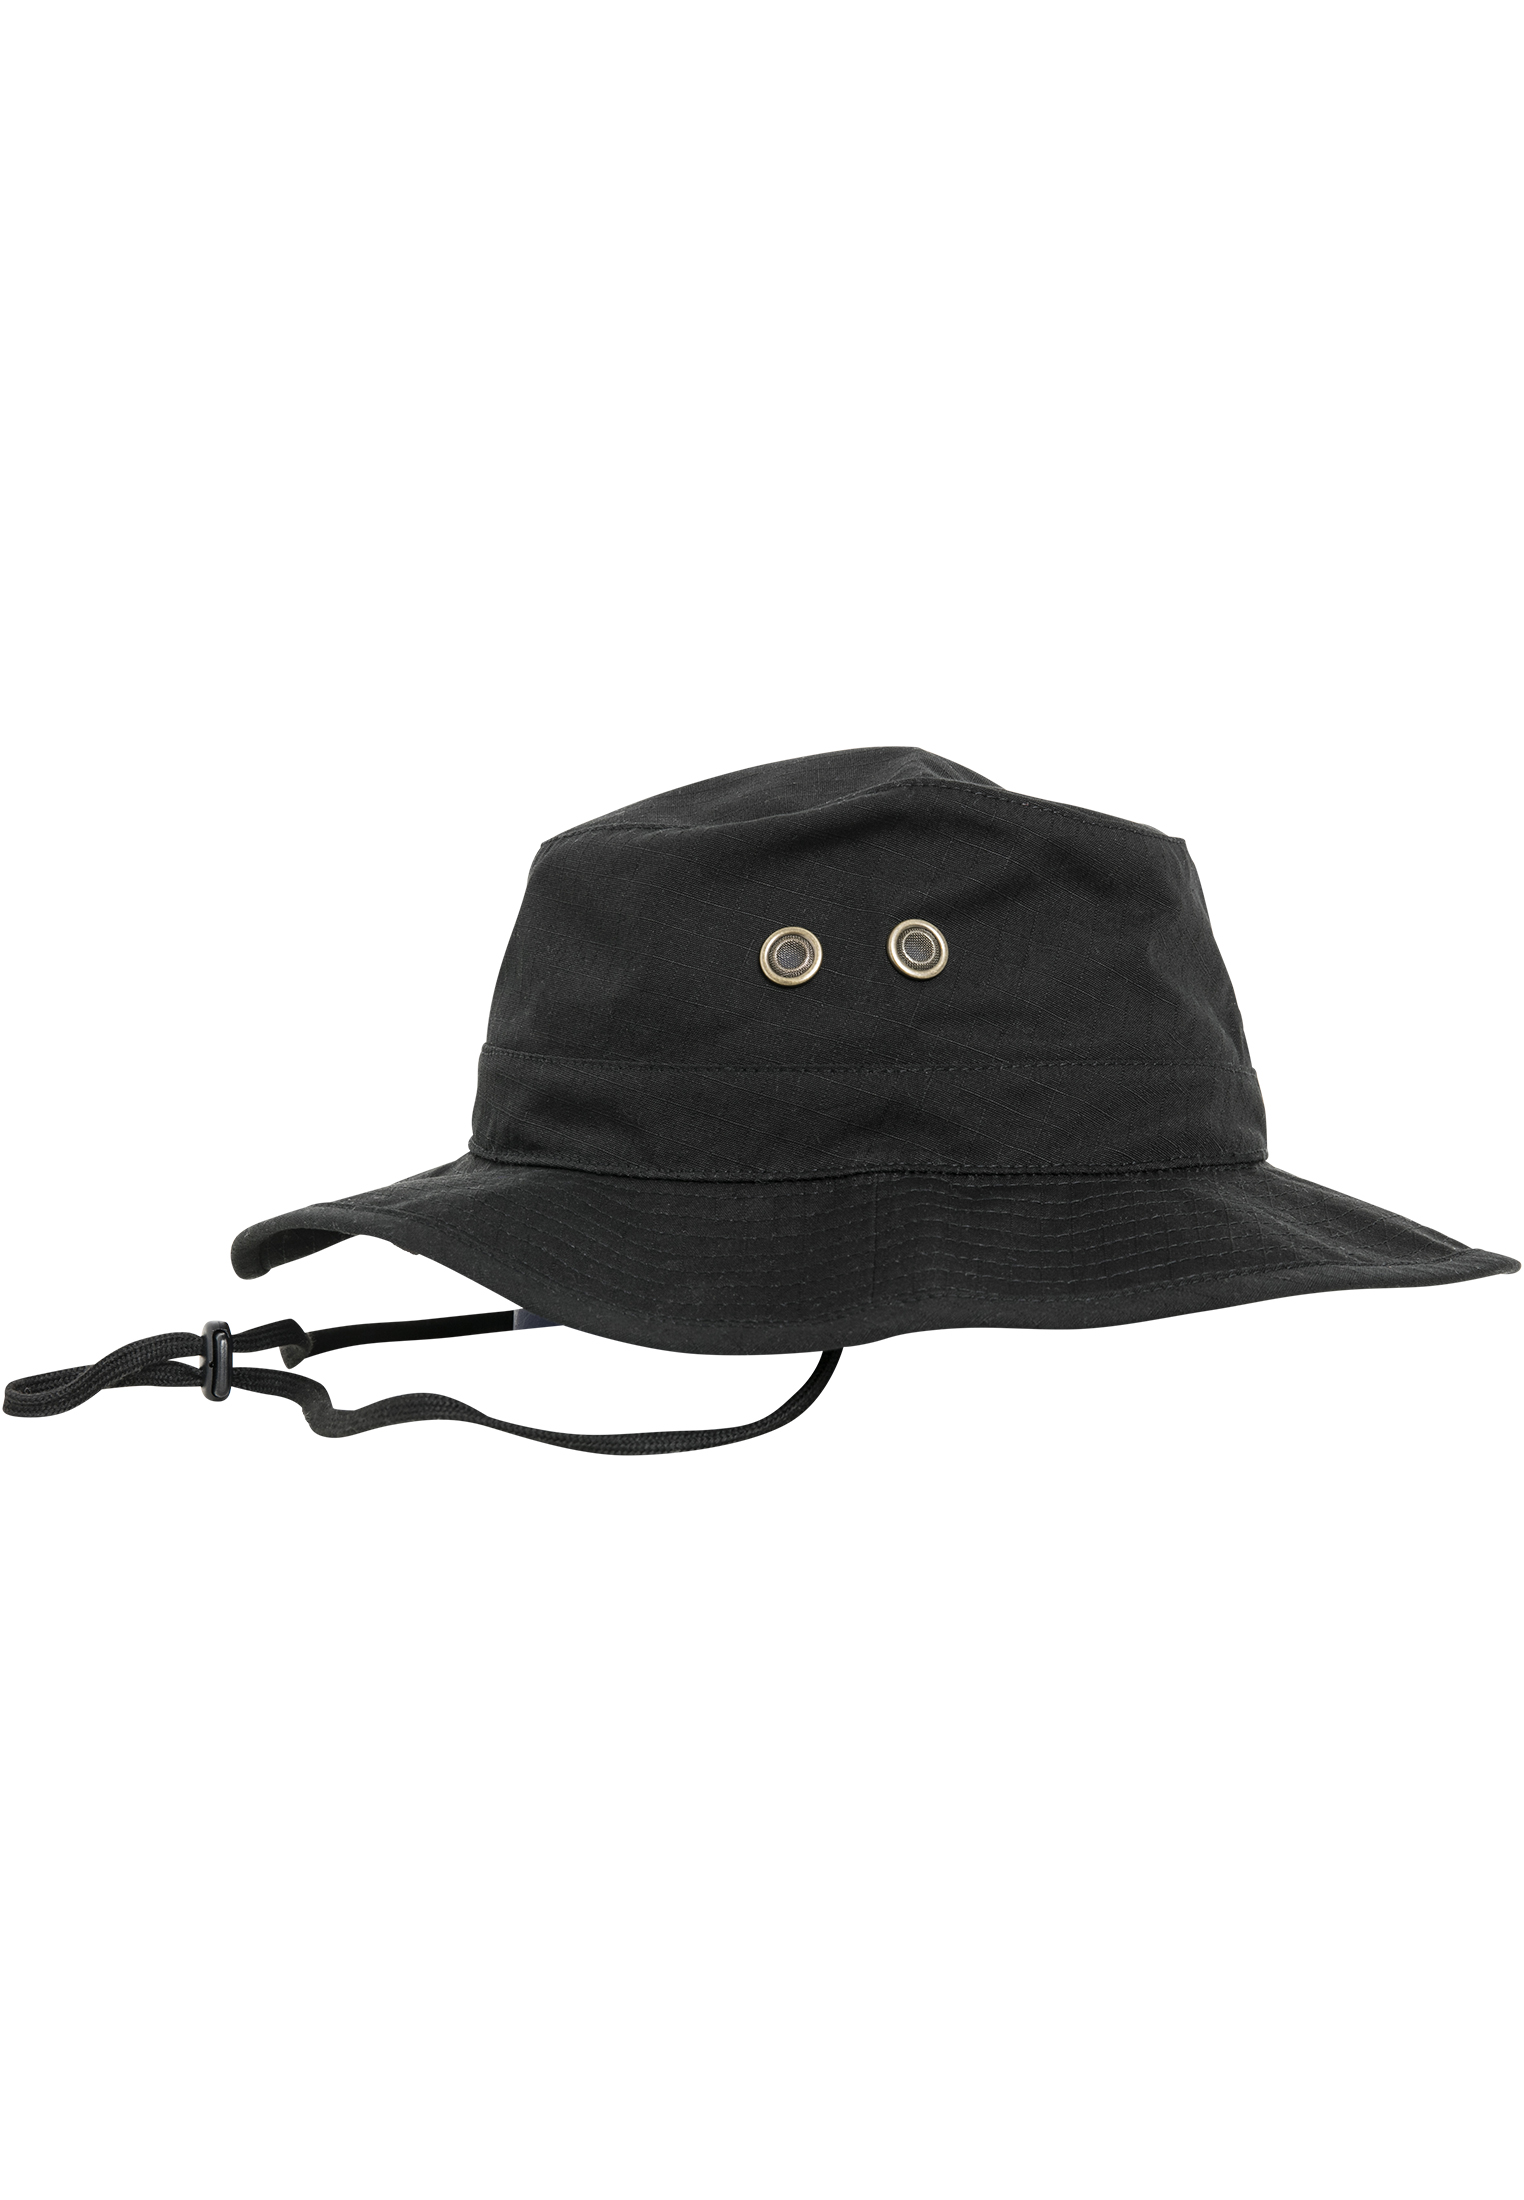 Angler Hat-5004AH